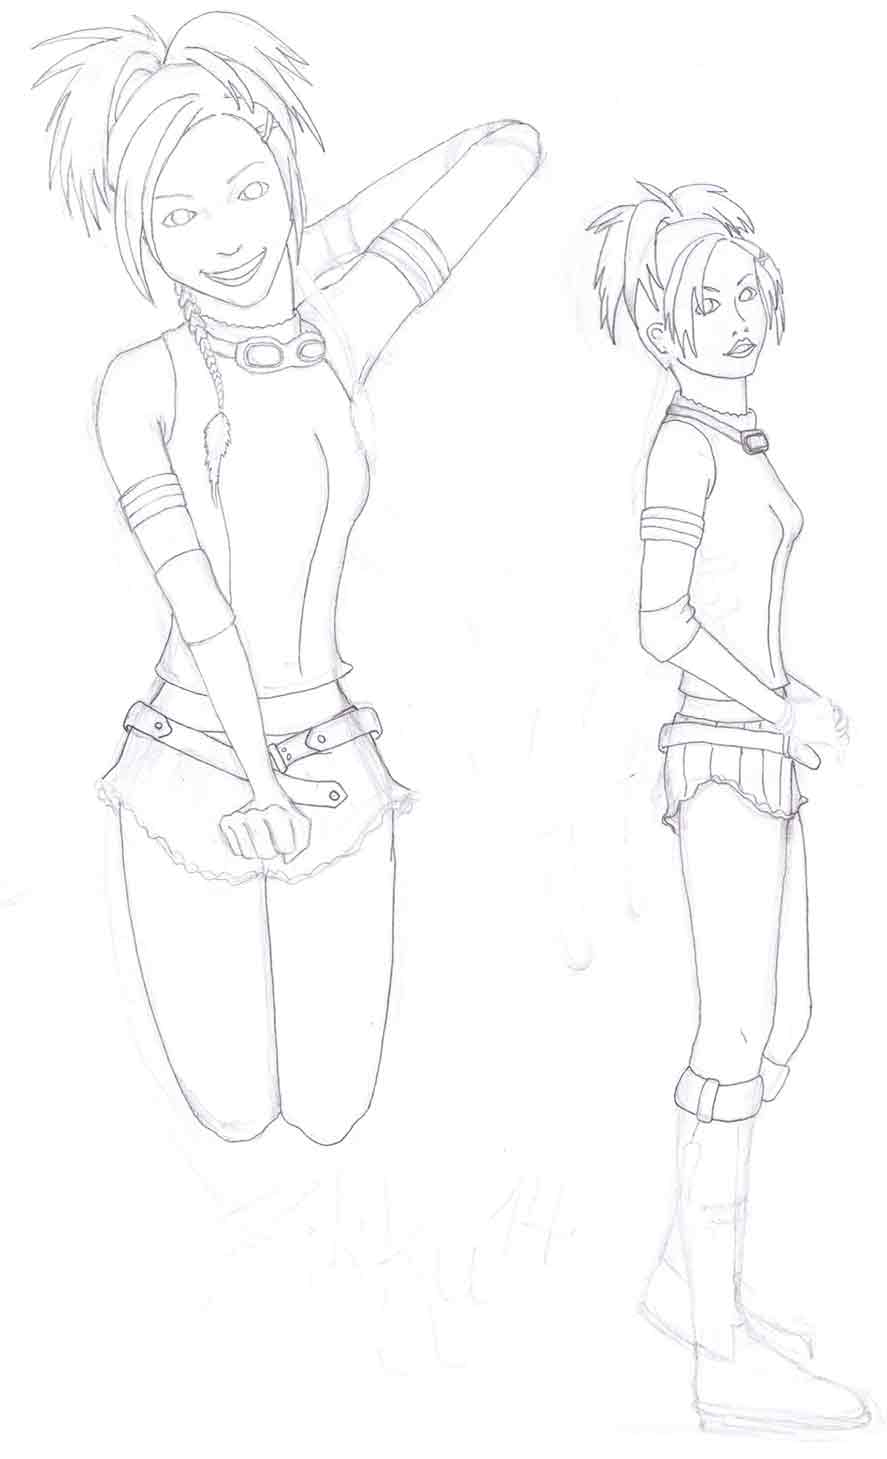 Rikku (unfinished sketch) by Pabbit_da_Rabbit